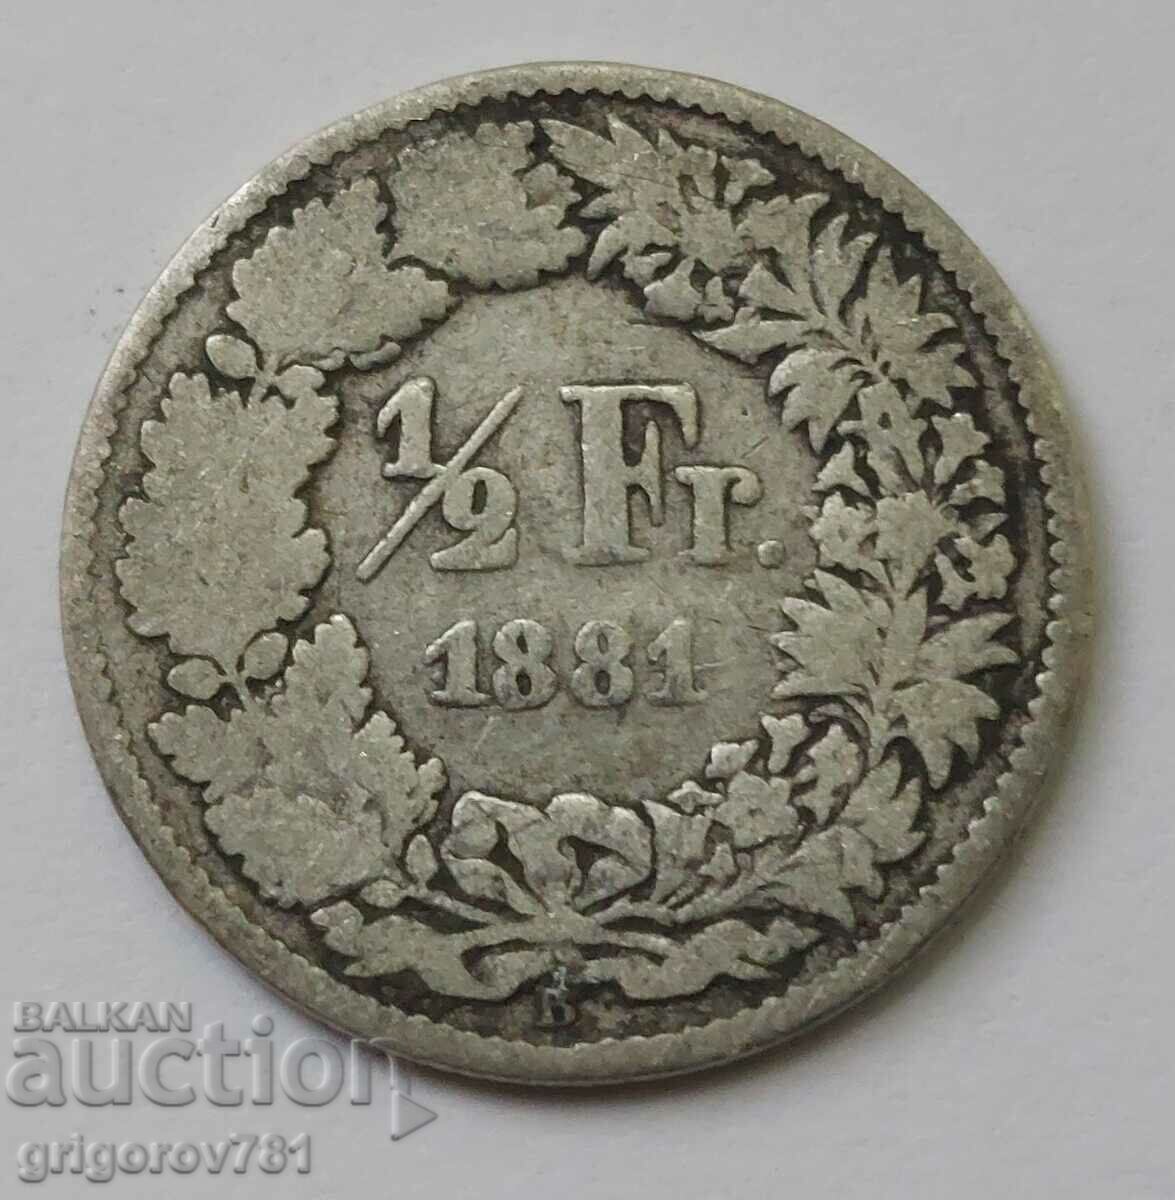 1/2 franc silver Switzerland 1881 B - silver coin